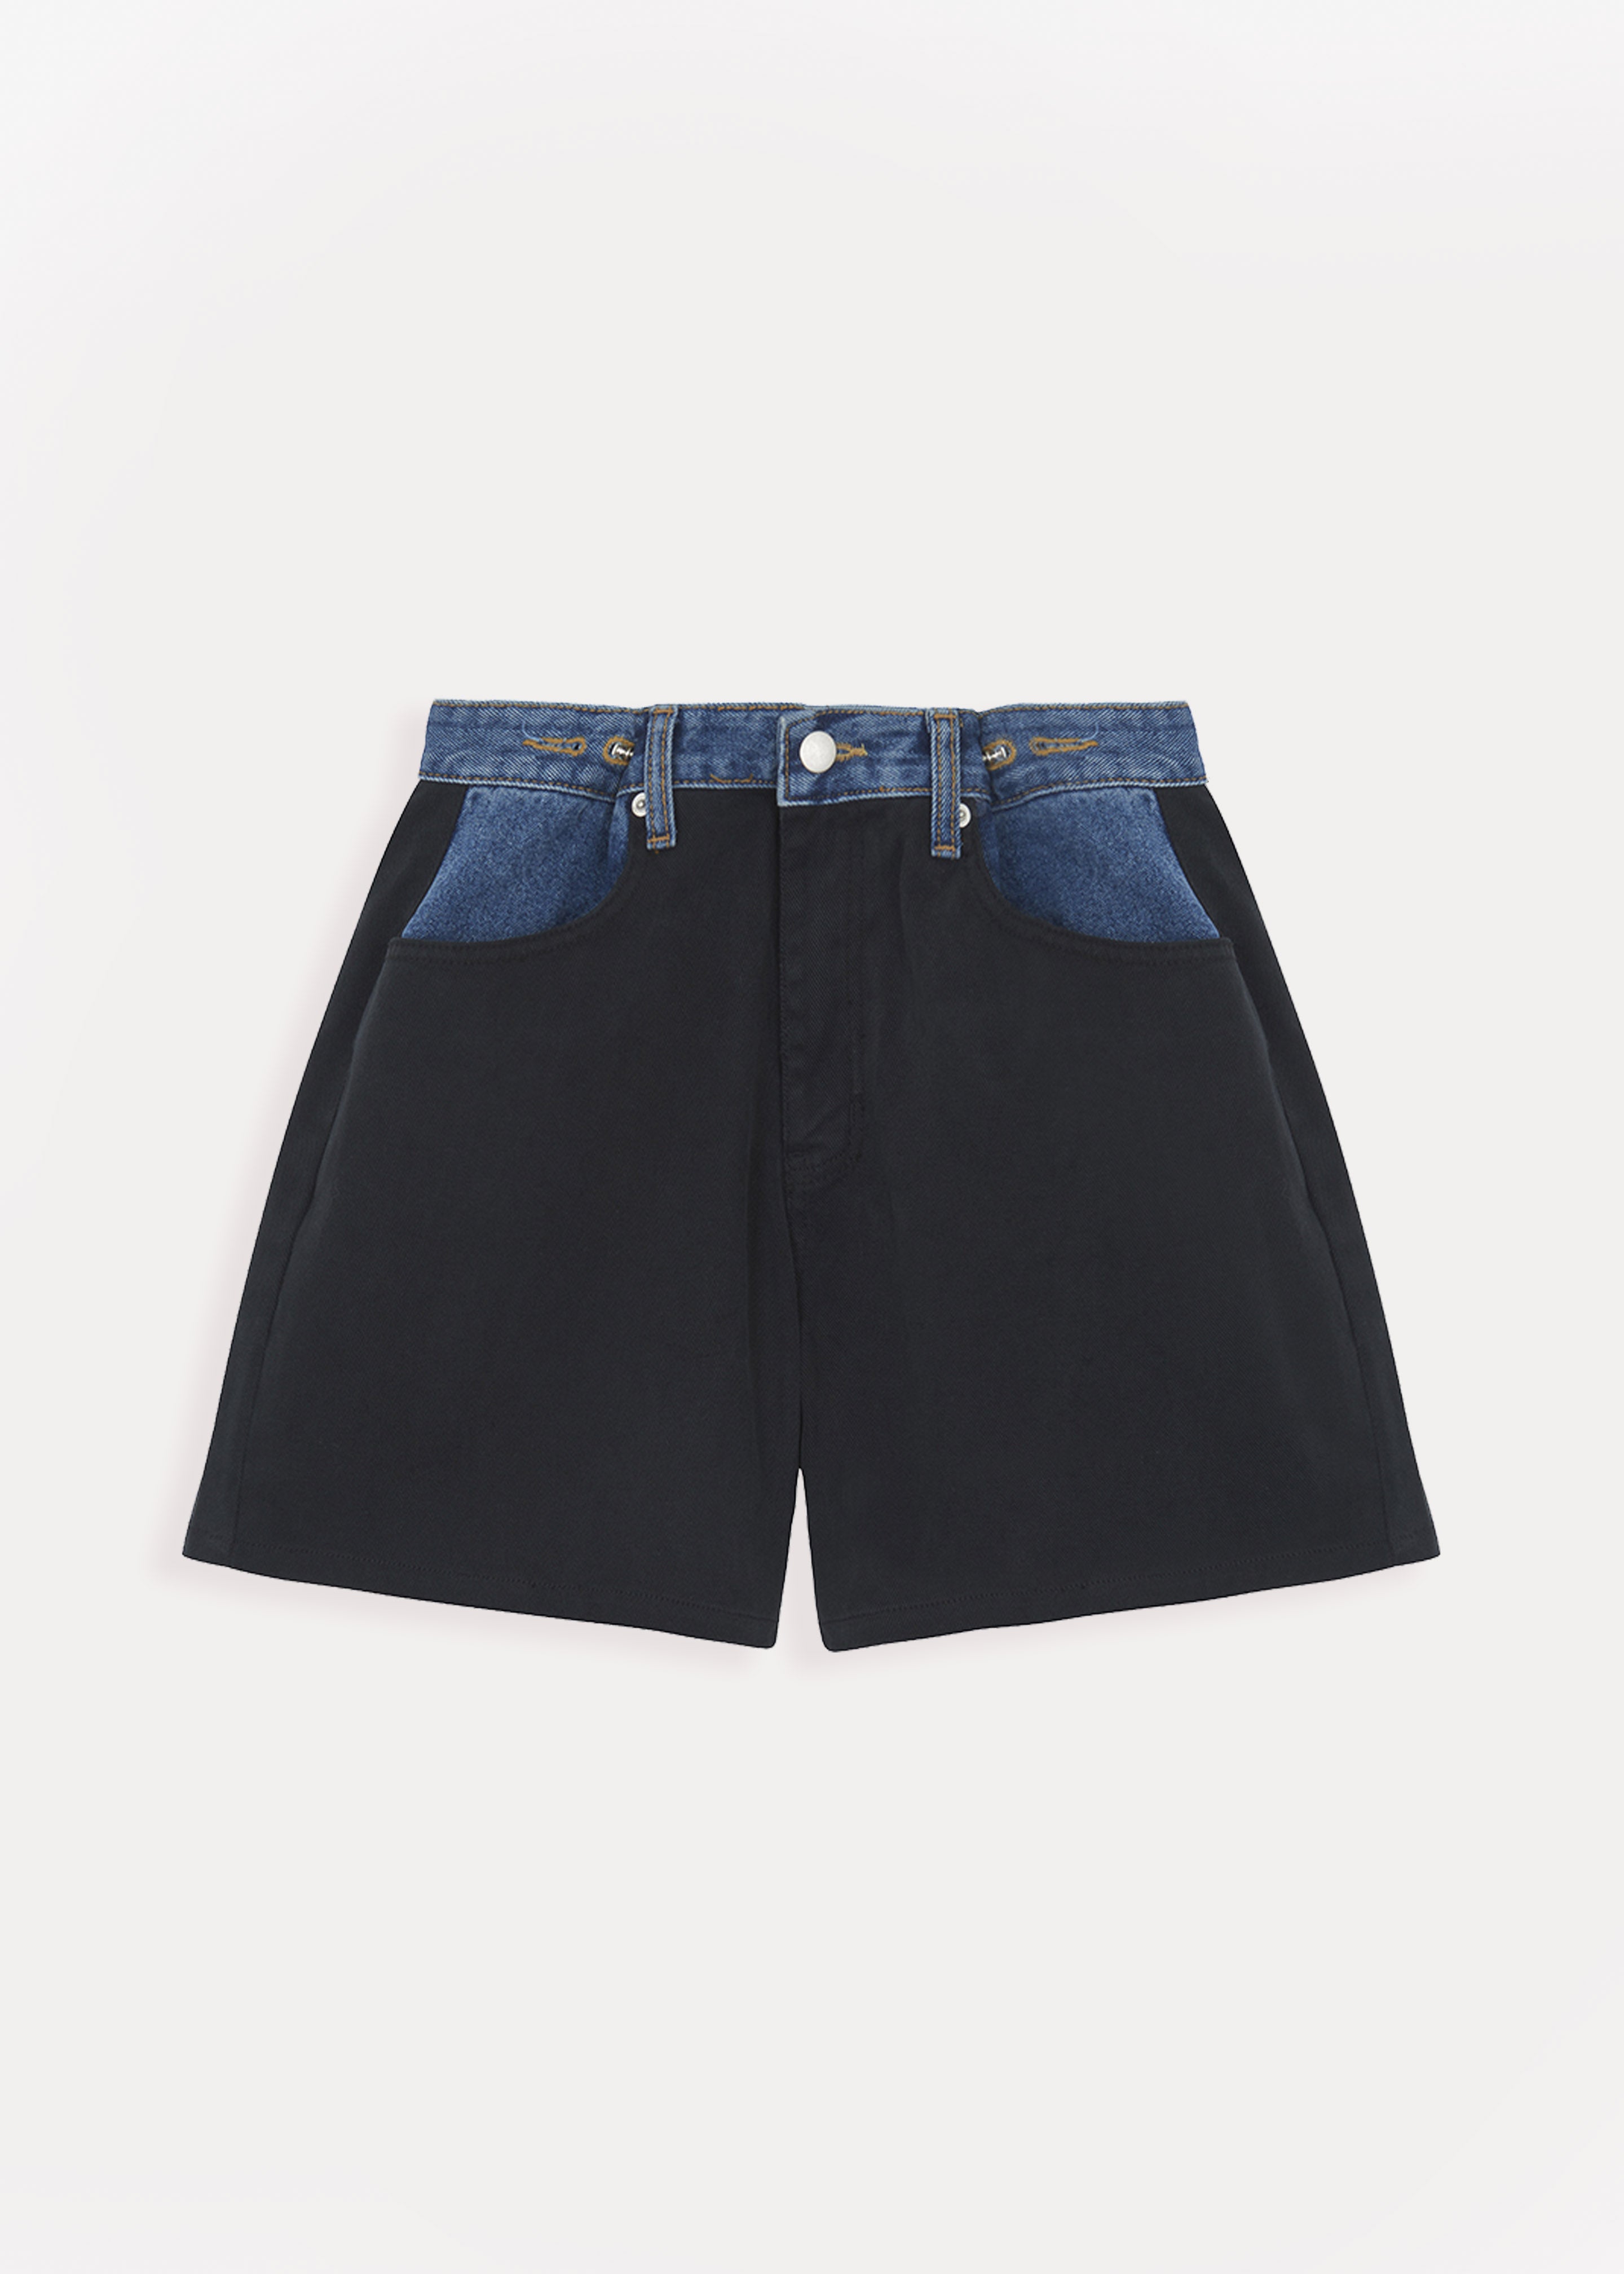 Hayla Contrast Denim Shorts - Black/Blue - 8